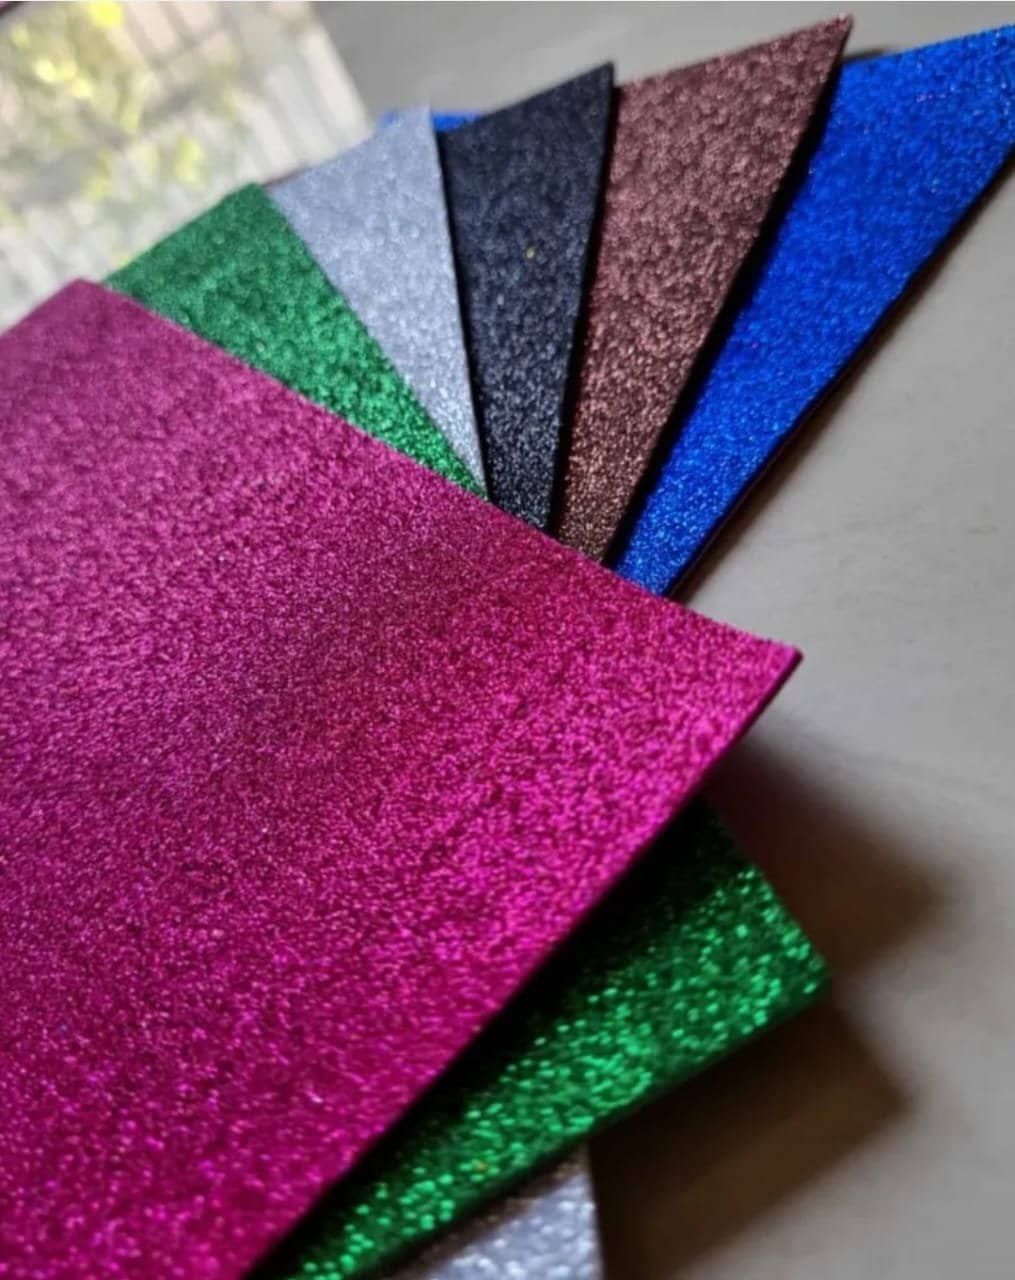 Glitter Foam Sheets, A4, 10 Sheets Assorted Colours 